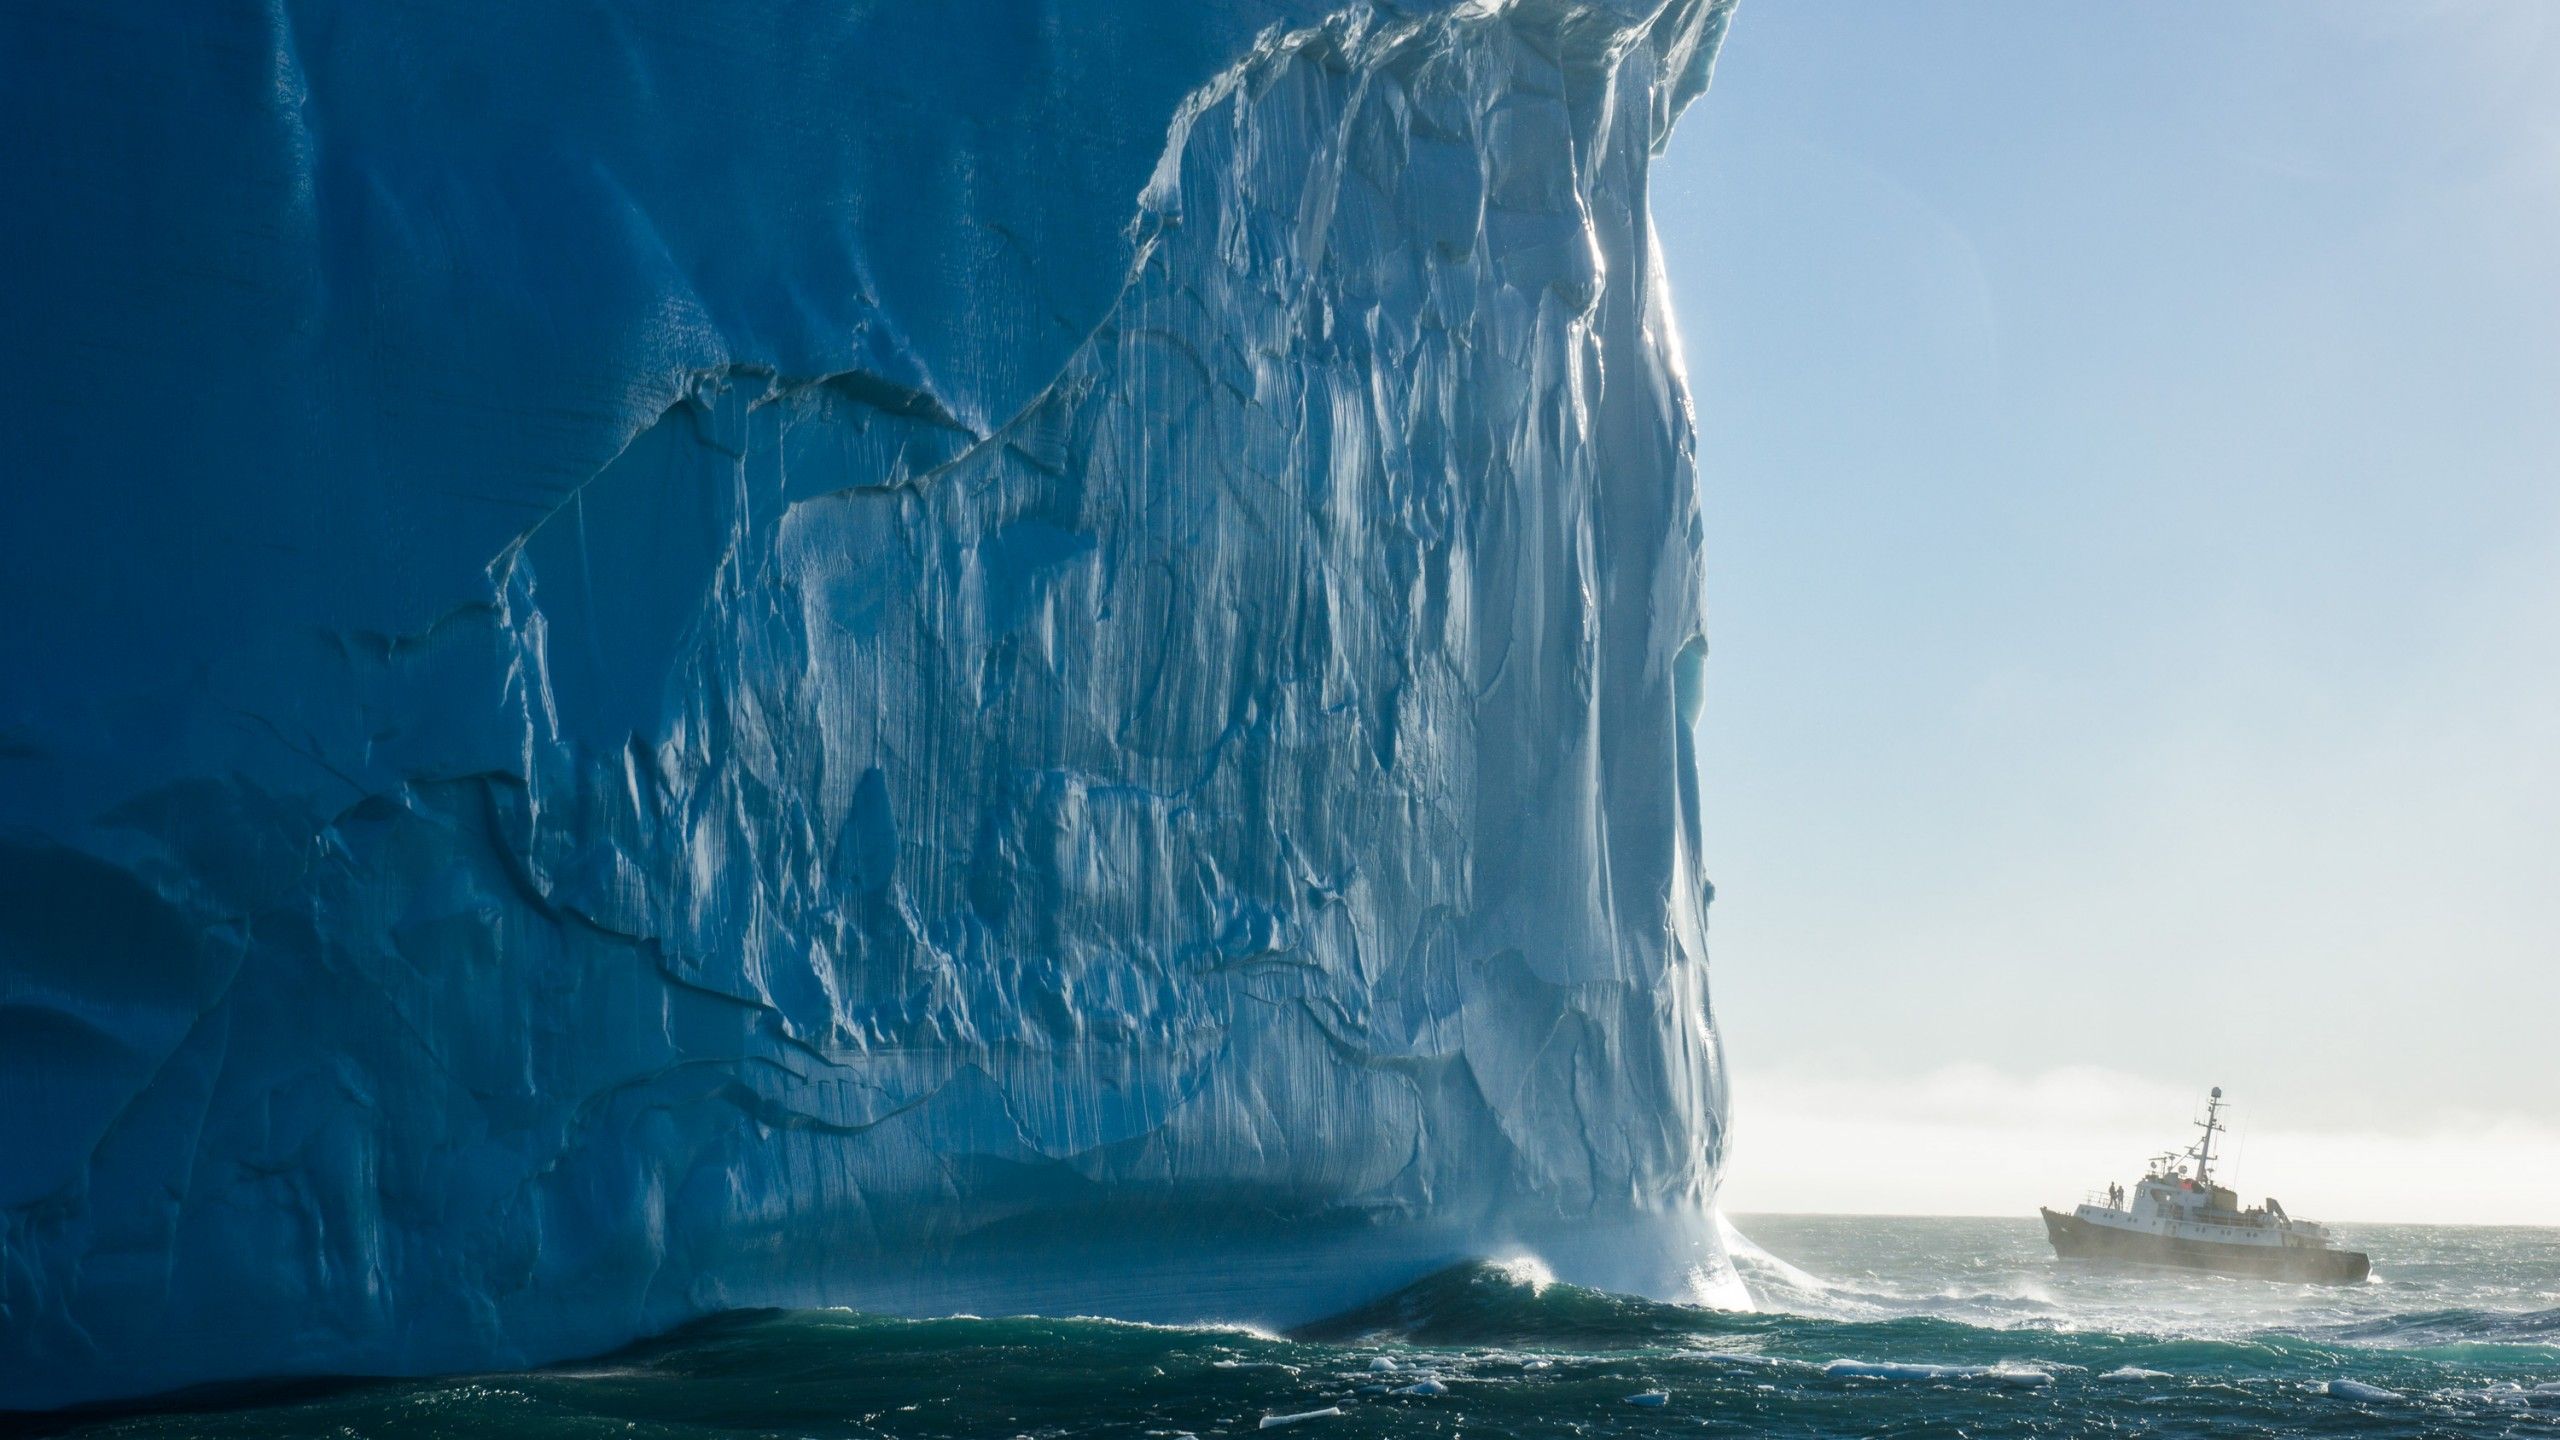 Wallpaper Iceberg, 4k, HD wallpaper, South Georgia, Atlantic Ocean, ship, travel, tourism, ocean, National Geographic Traveler Photo Contest, Nature